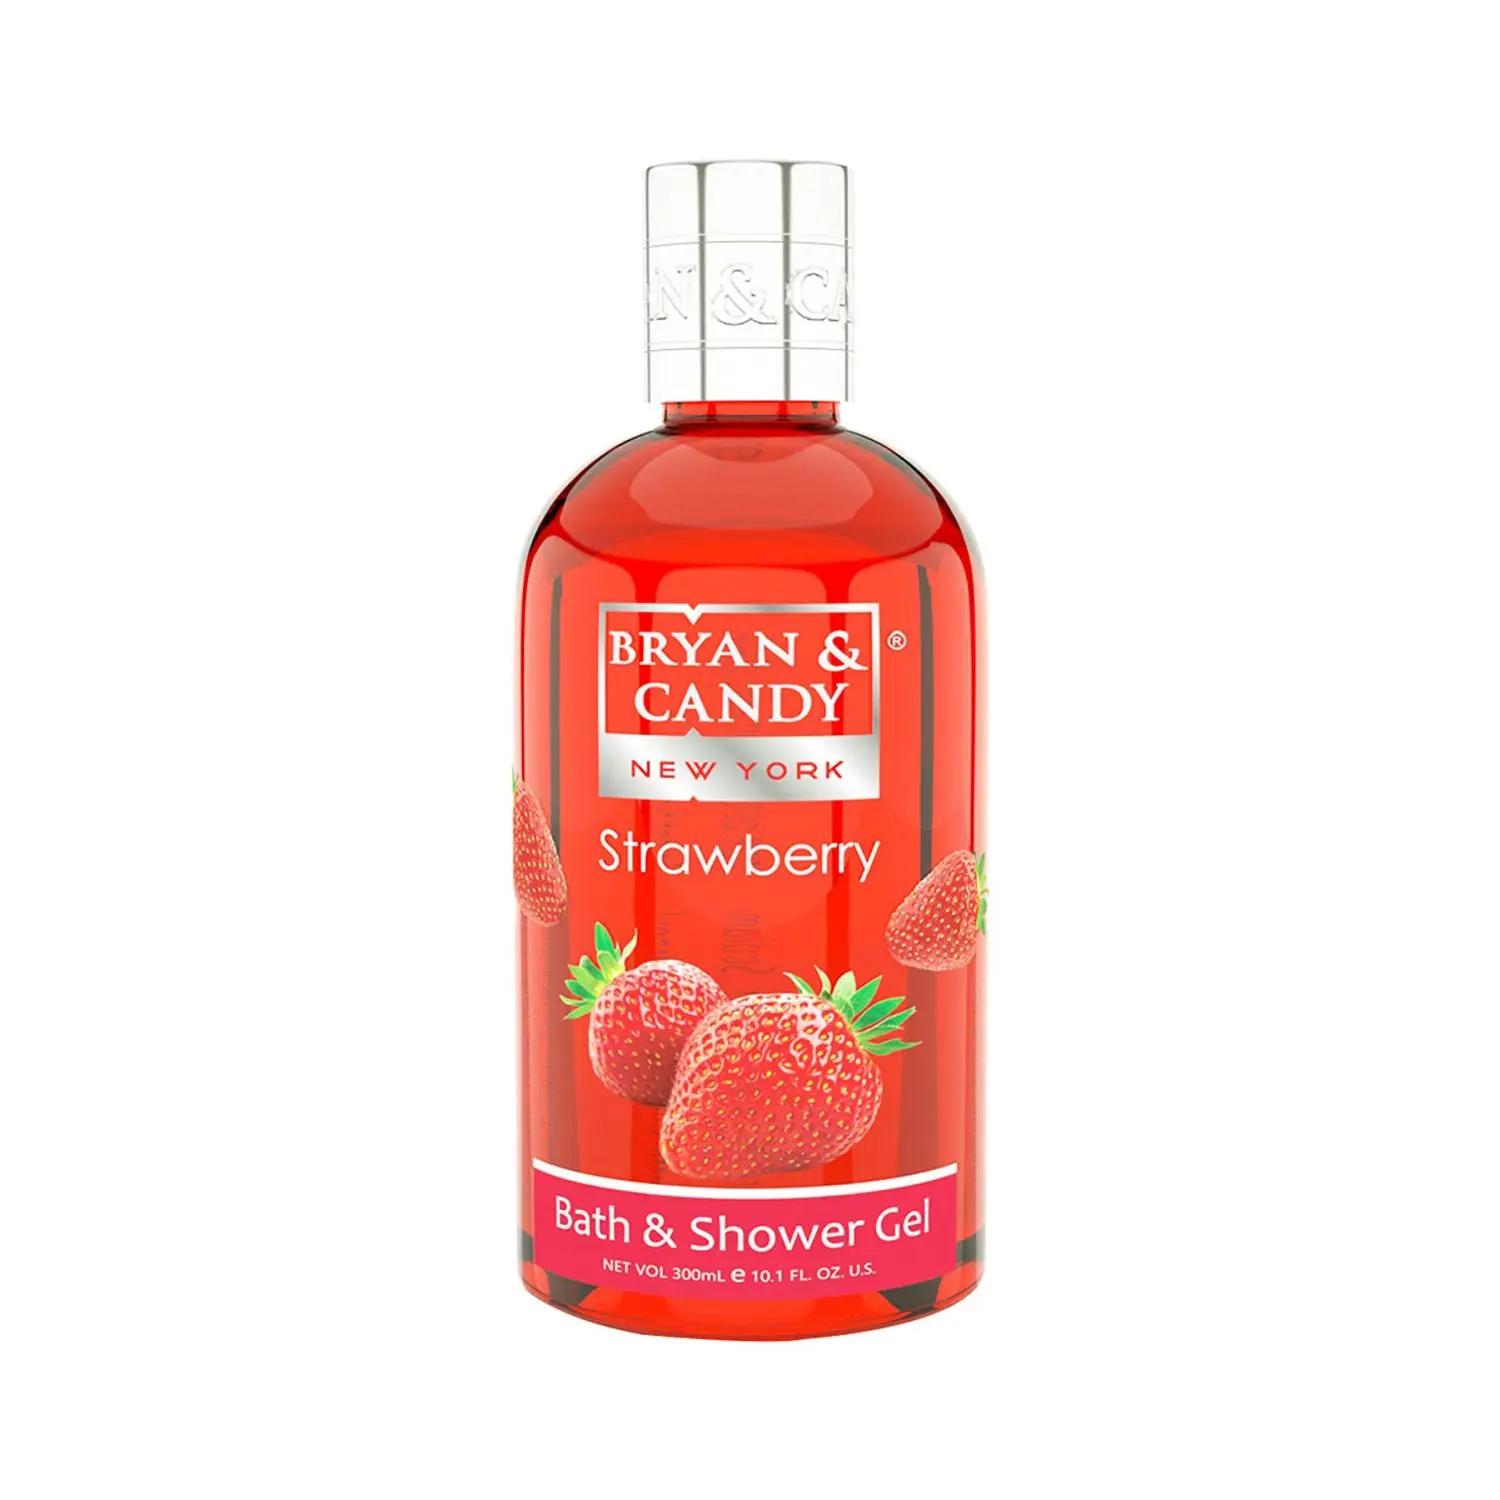 BRYAN & CANDY | BRYAN & CANDY Strawberry Shower Gel (300ml)